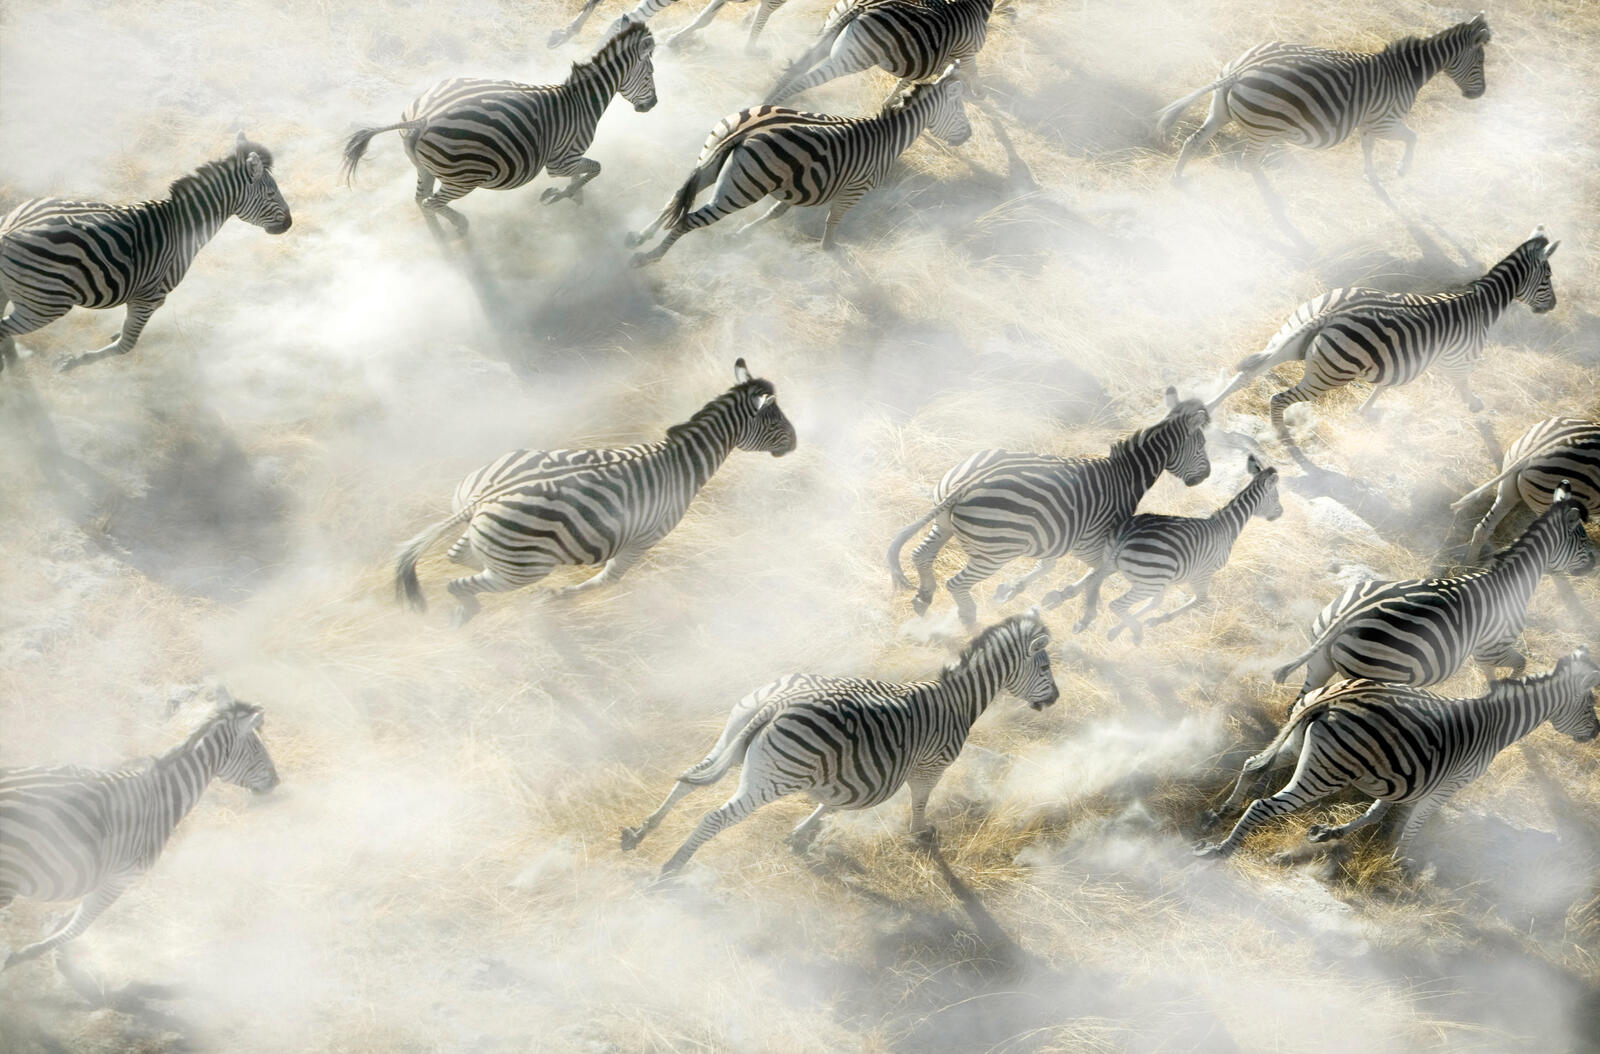 Aerial view of Zebra herd running, Okavango Delta, Botswana.
Burchell's zebra (Equus burchelli)